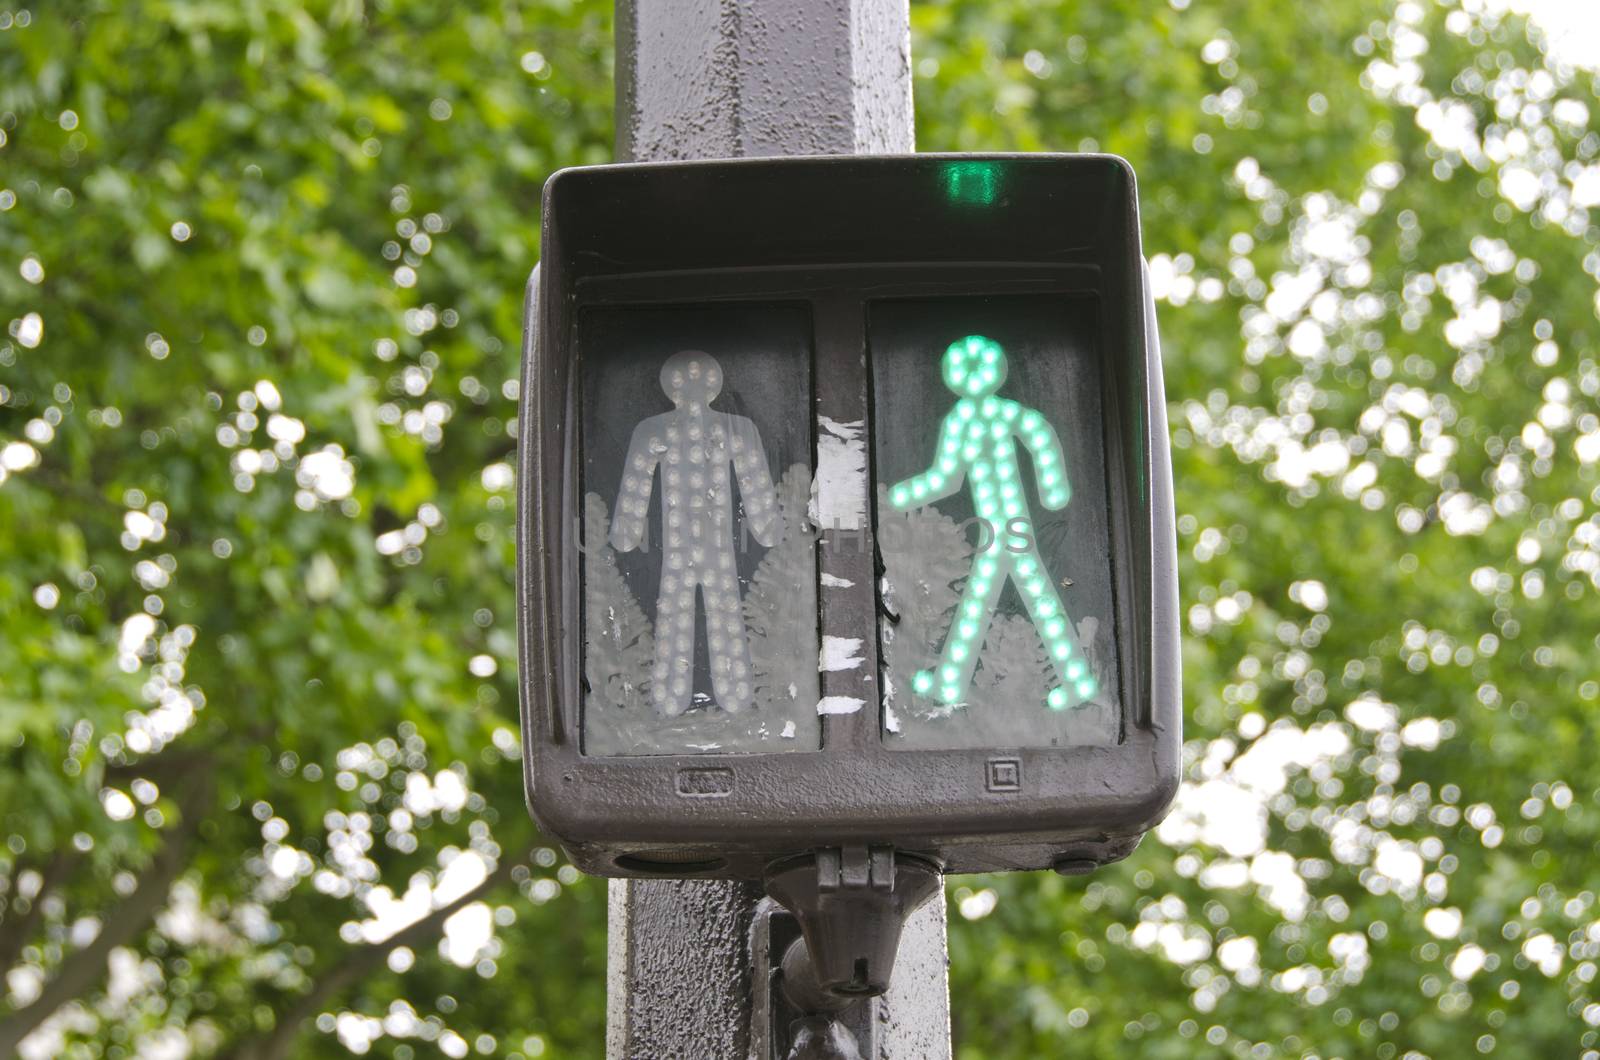 green traffic light signal sign in city street